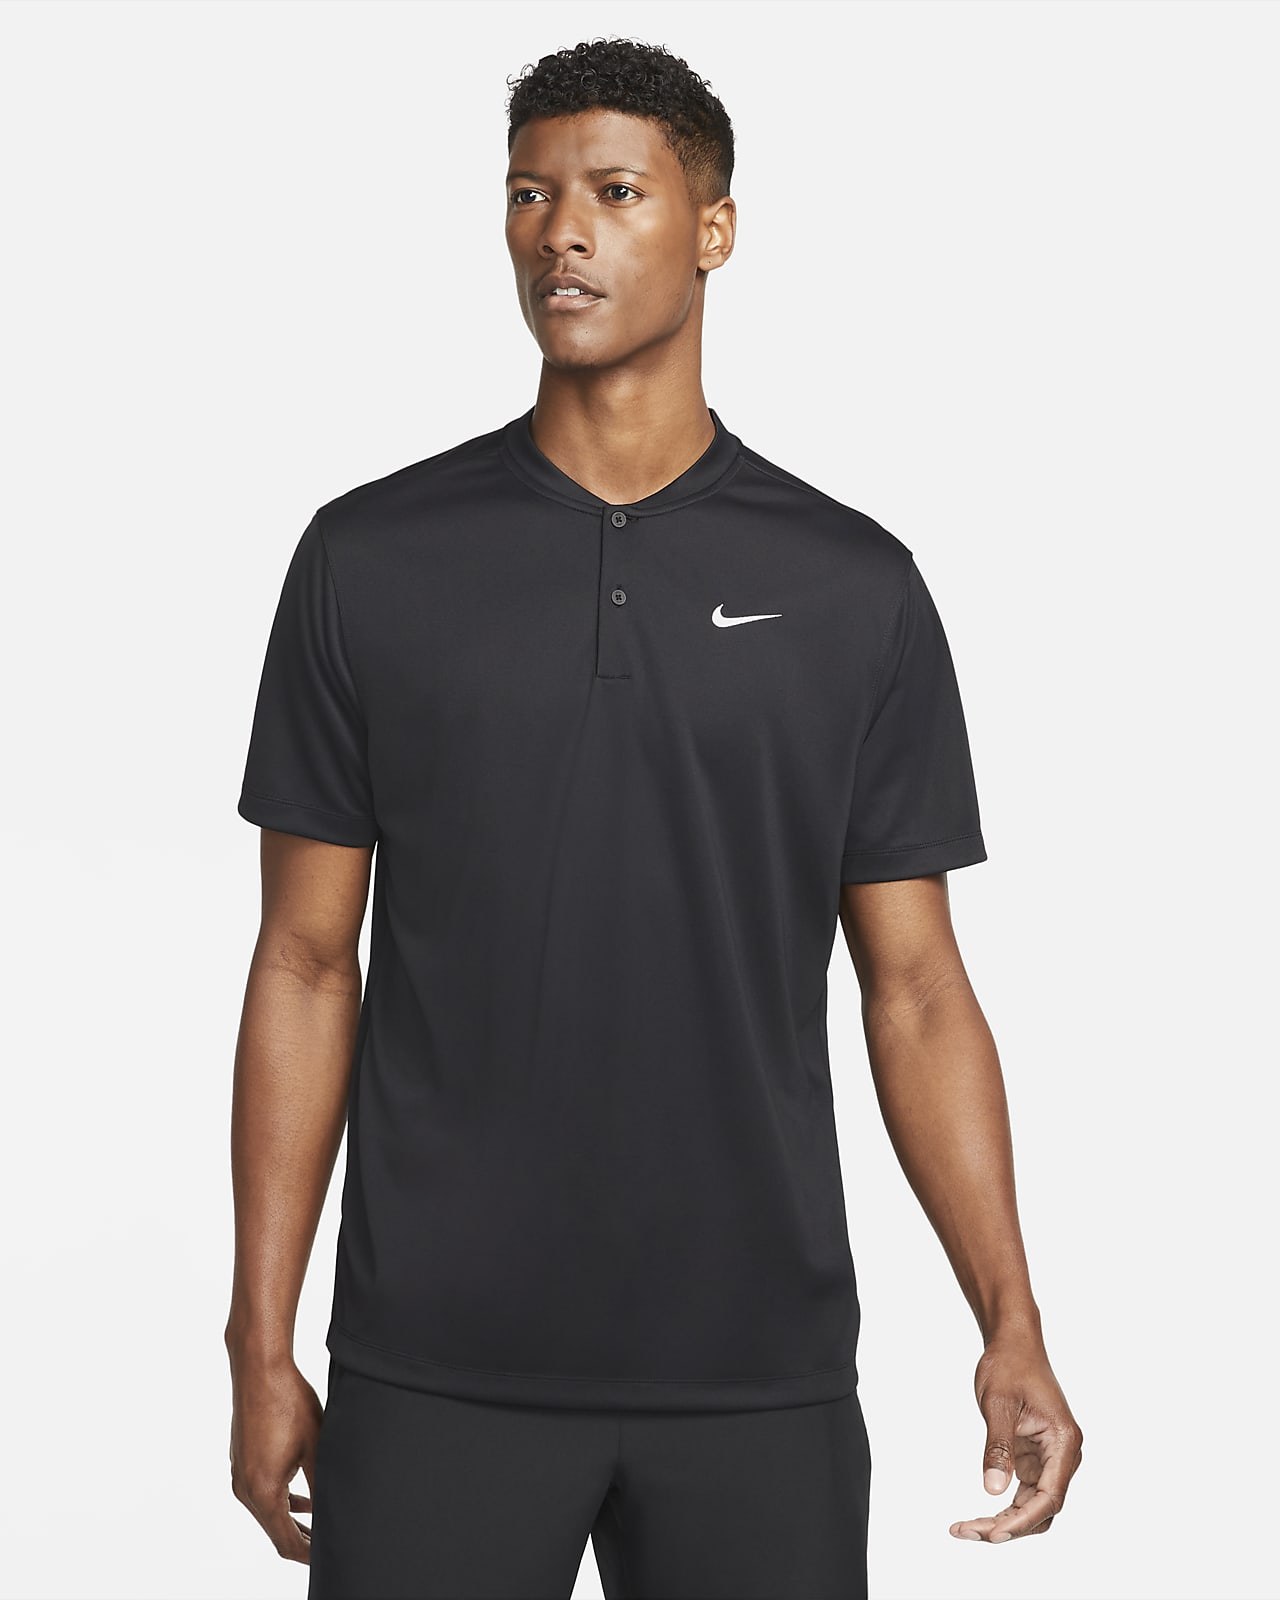 Mens Nike The Athletic Dept Black White Stripe Collared Polo Short Sleeve  Size M